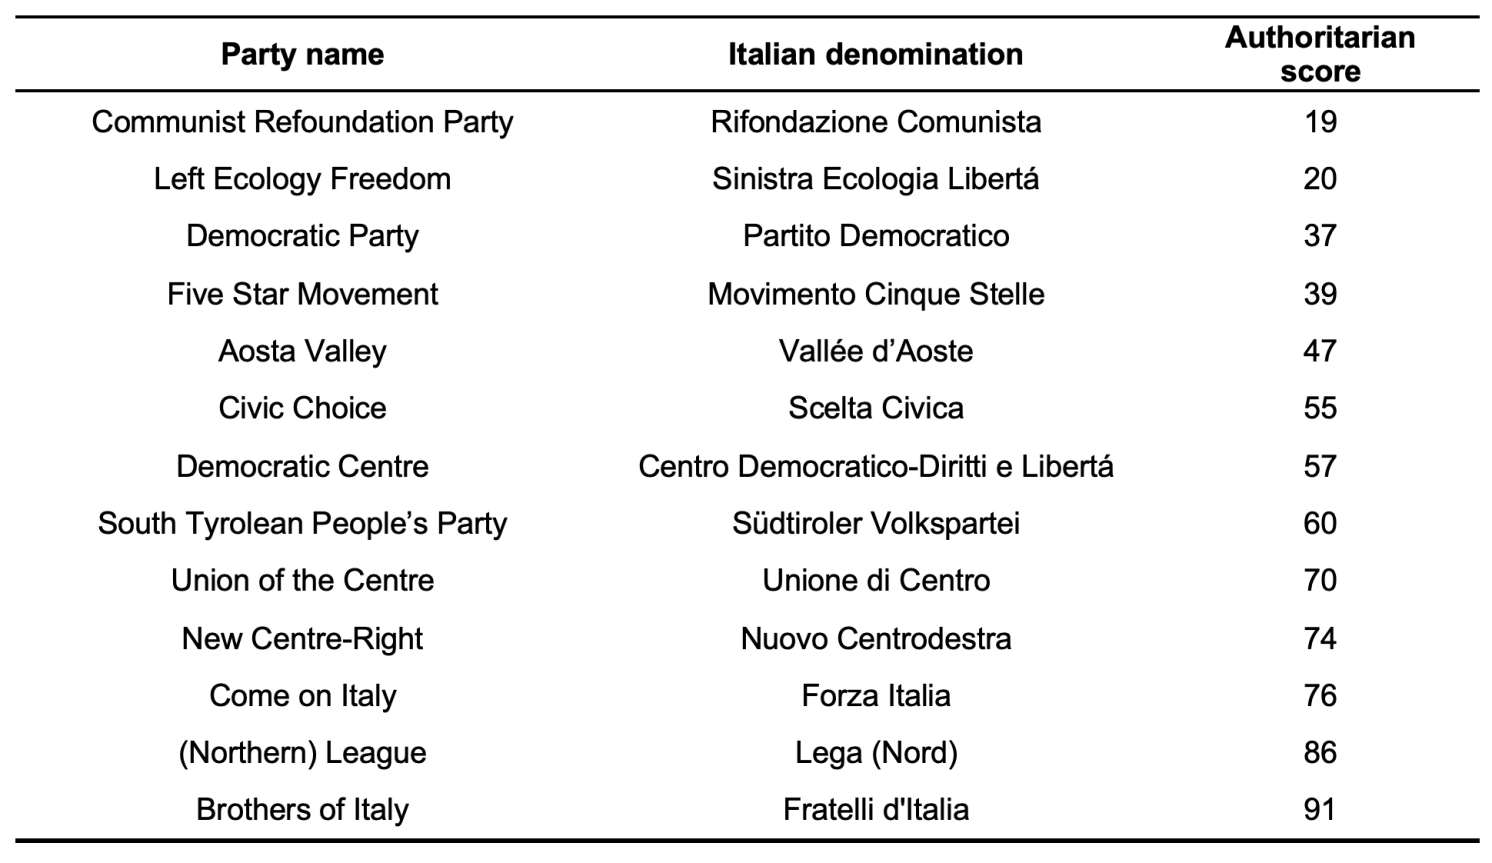 Table 1 Authoritarian scores for Italian parties